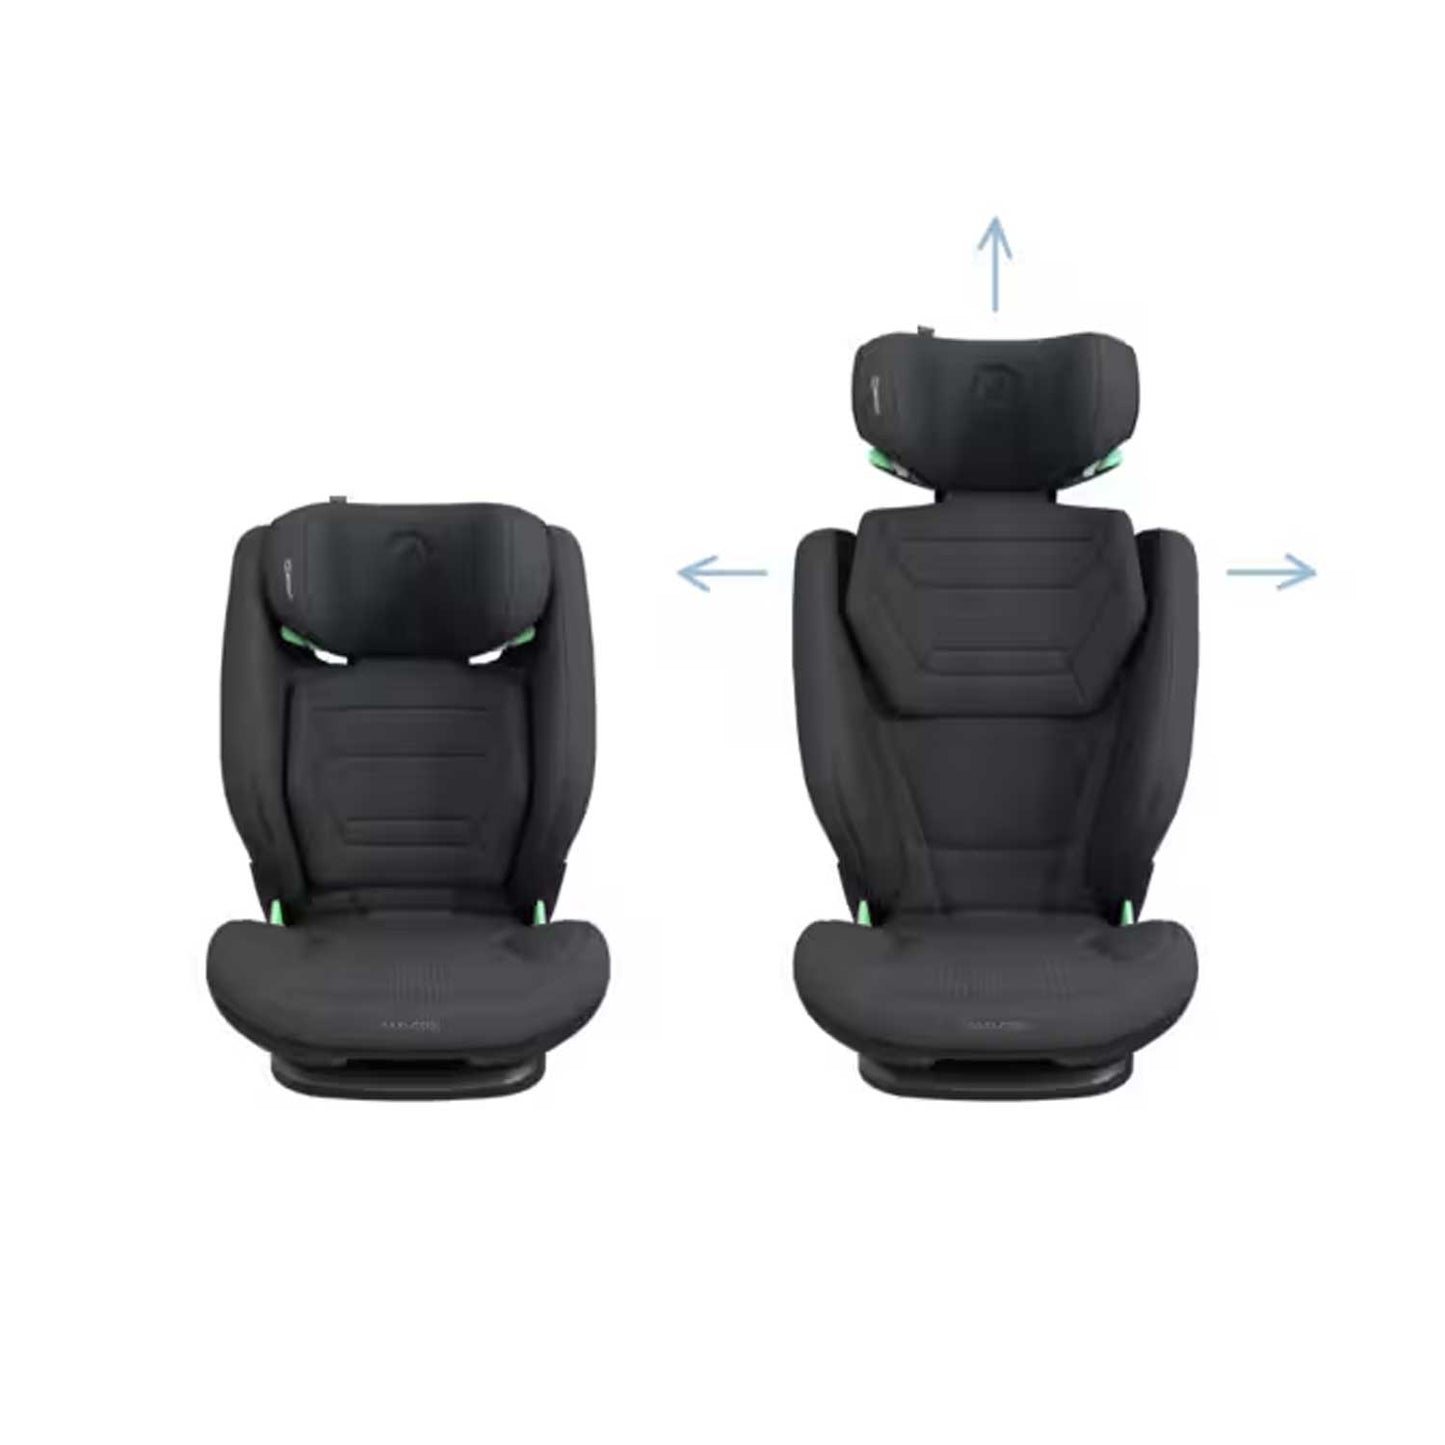 Maxi Cosi - Rodifix Pro2 I-Size Car Seat